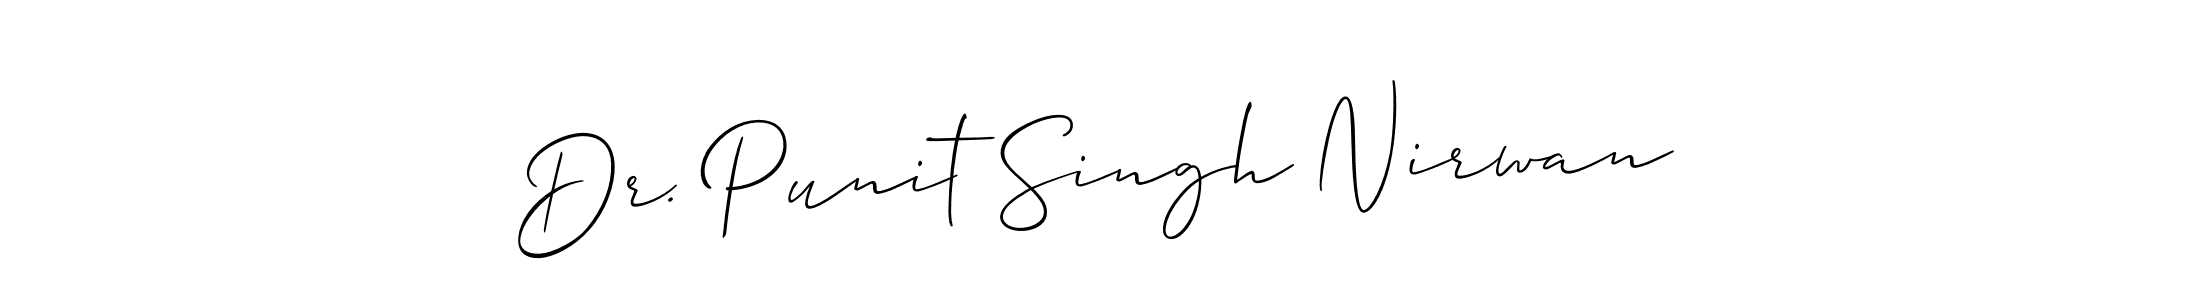 How to Draw Dr. Punit Singh Nirwan signature style? Allison_Script is a latest design signature styles for name Dr. Punit Singh Nirwan. Dr. Punit Singh Nirwan signature style 2 images and pictures png